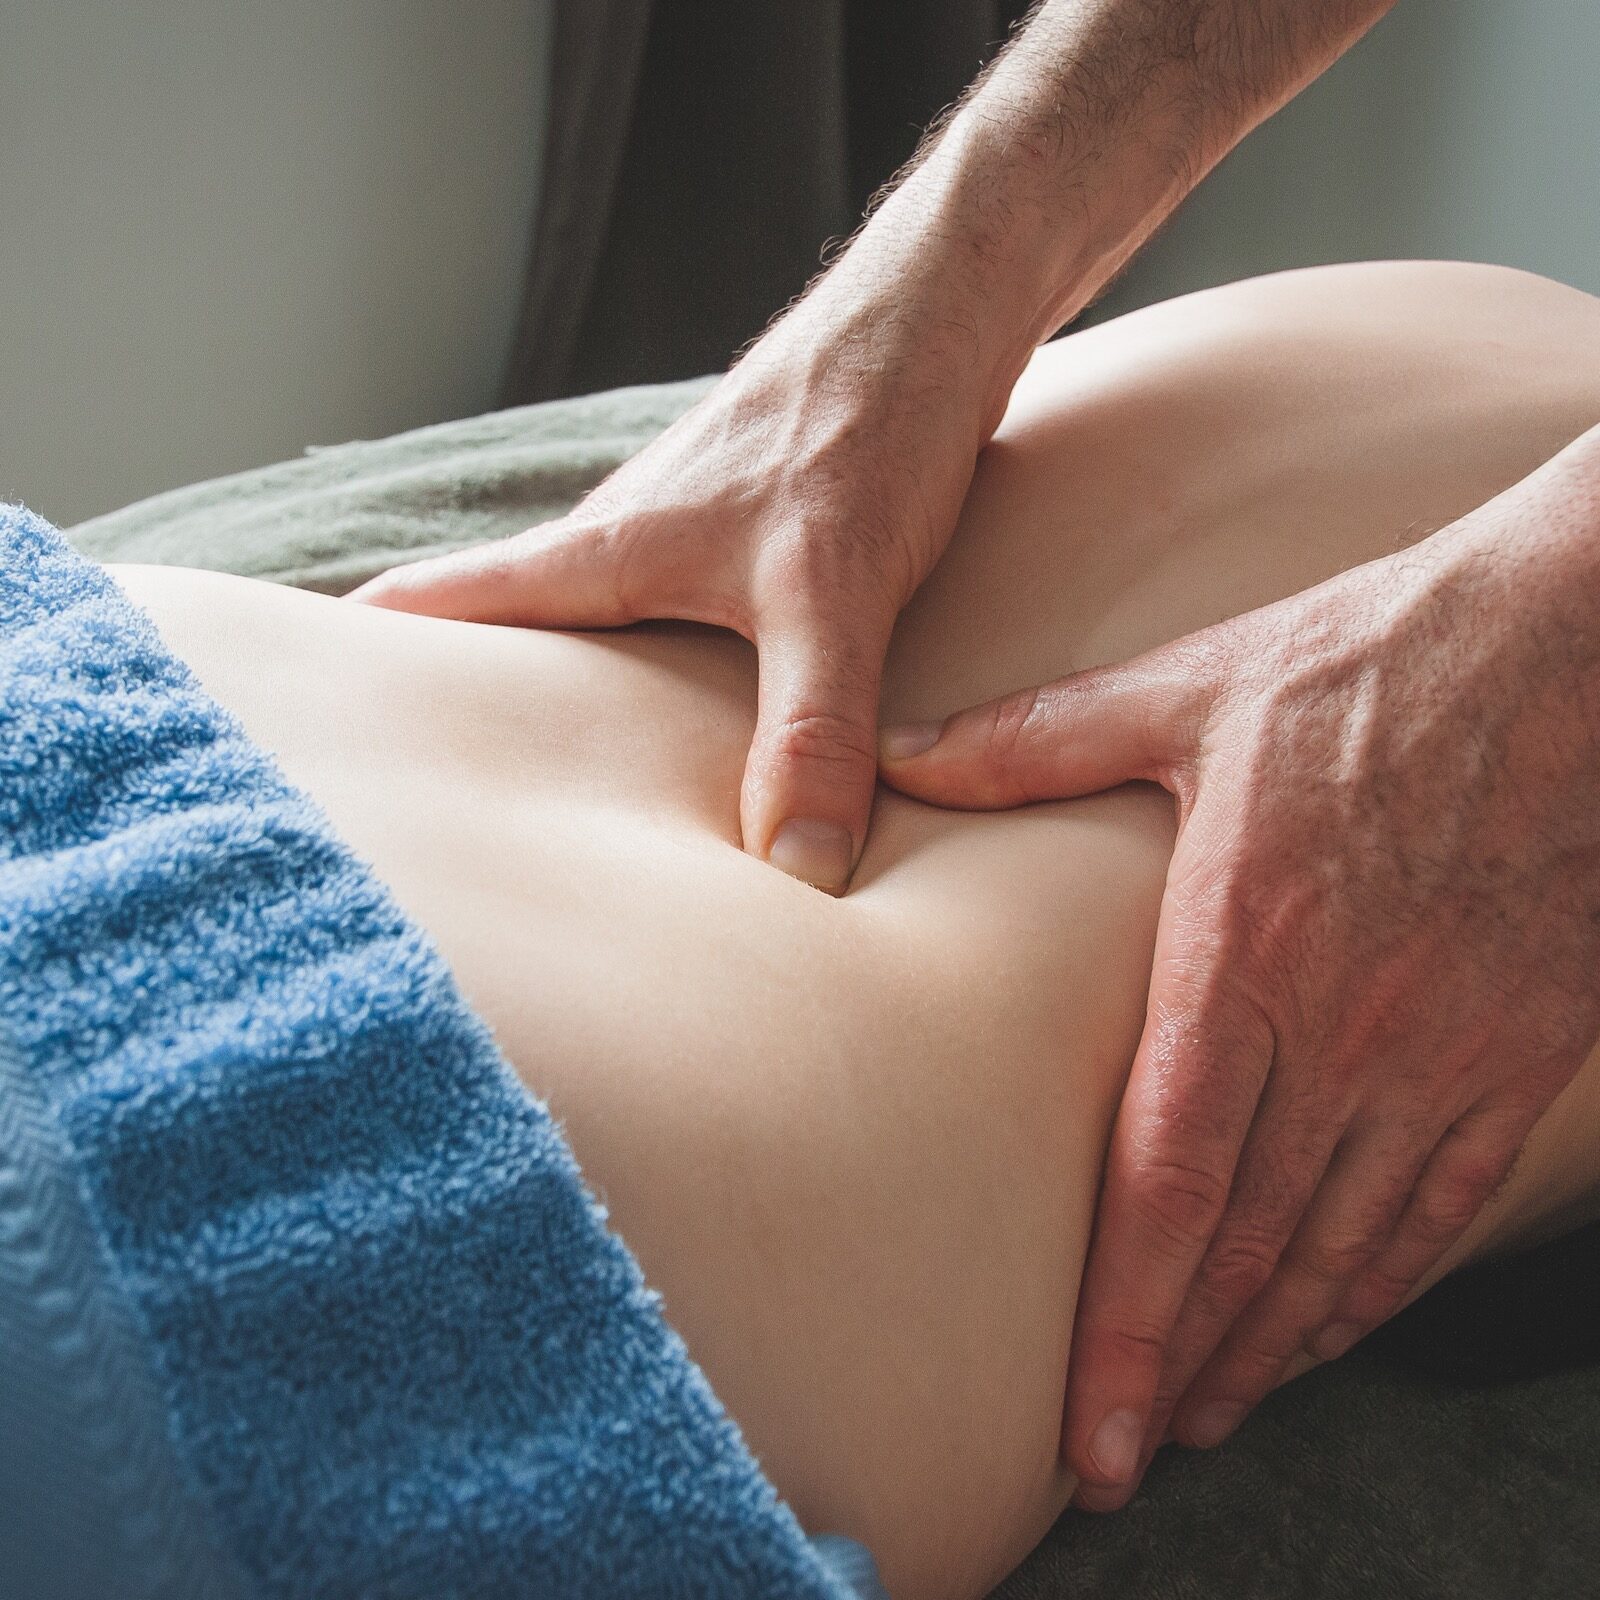 Geert De Vuyst - Massage Therapy Center - Johanna Vanden Heede fotografie